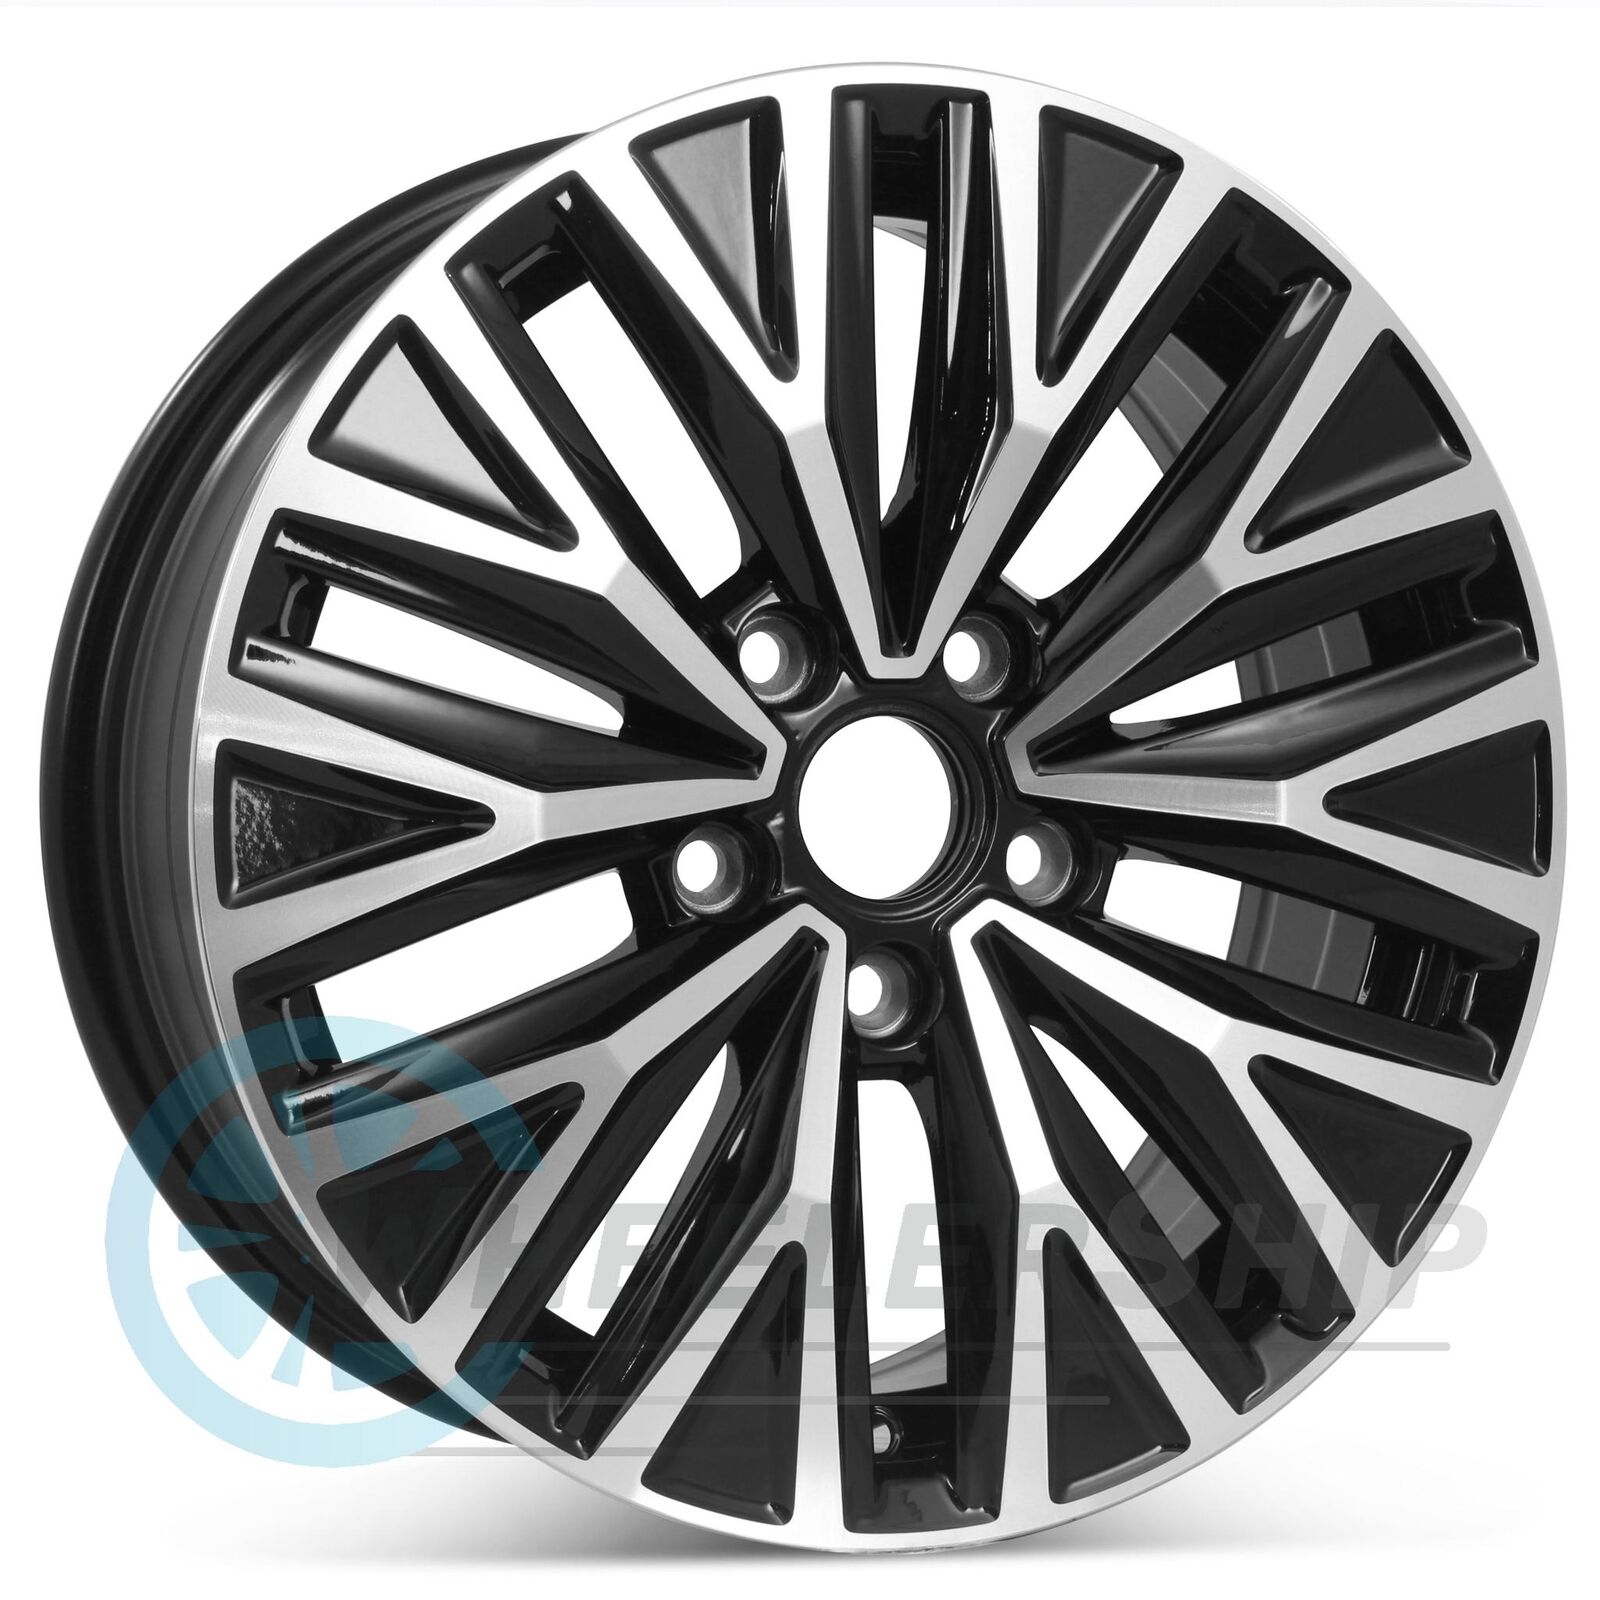 New 16” x 6.5” 10 spoke Alloy Replacement wheel For Volkswagen Jetta 2019 202...